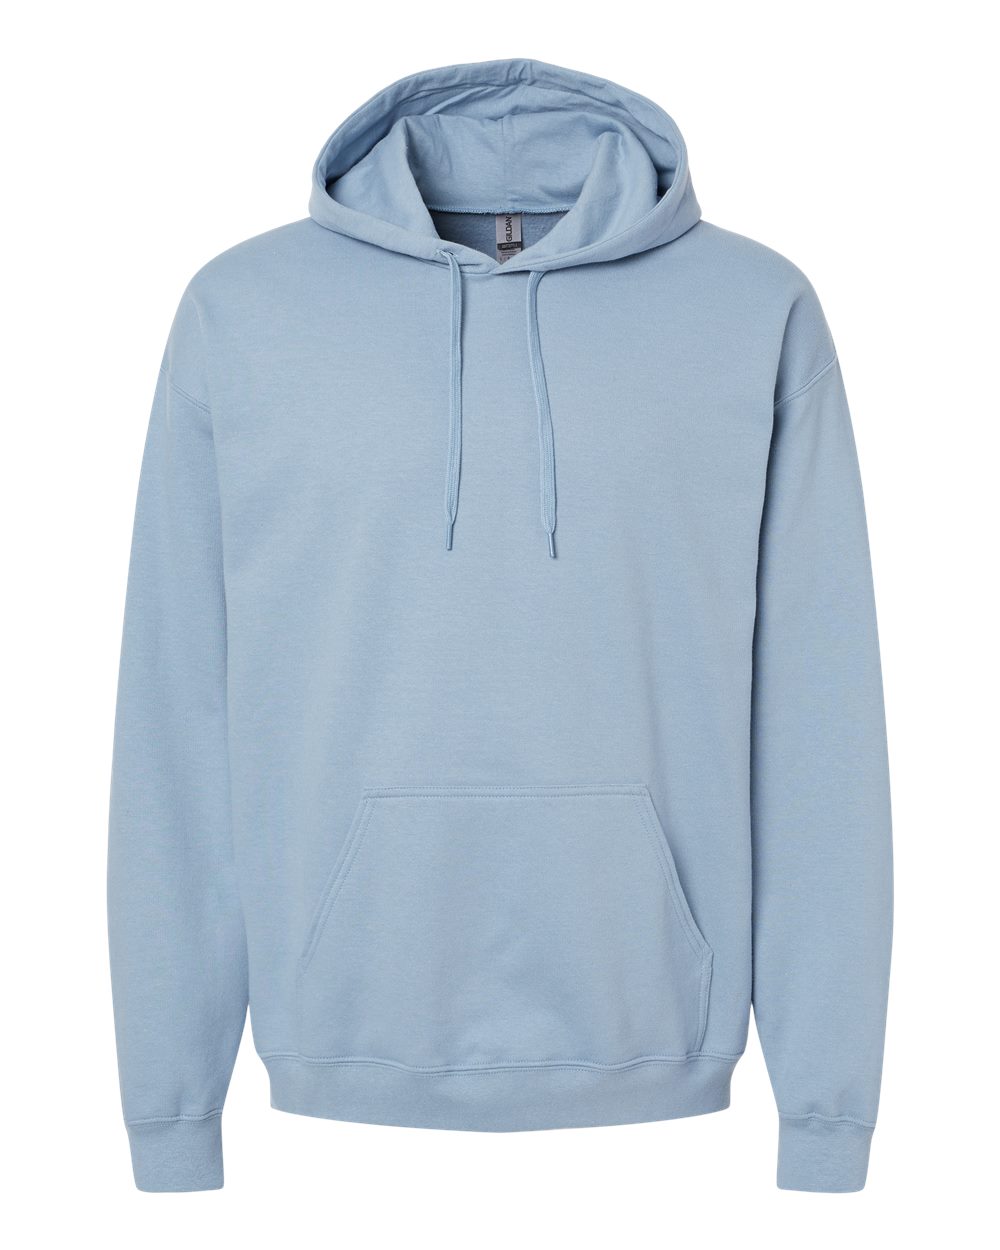 Pretreated Gildan SF500 Softstyle Hooded Sweatshirt - Stone Blue